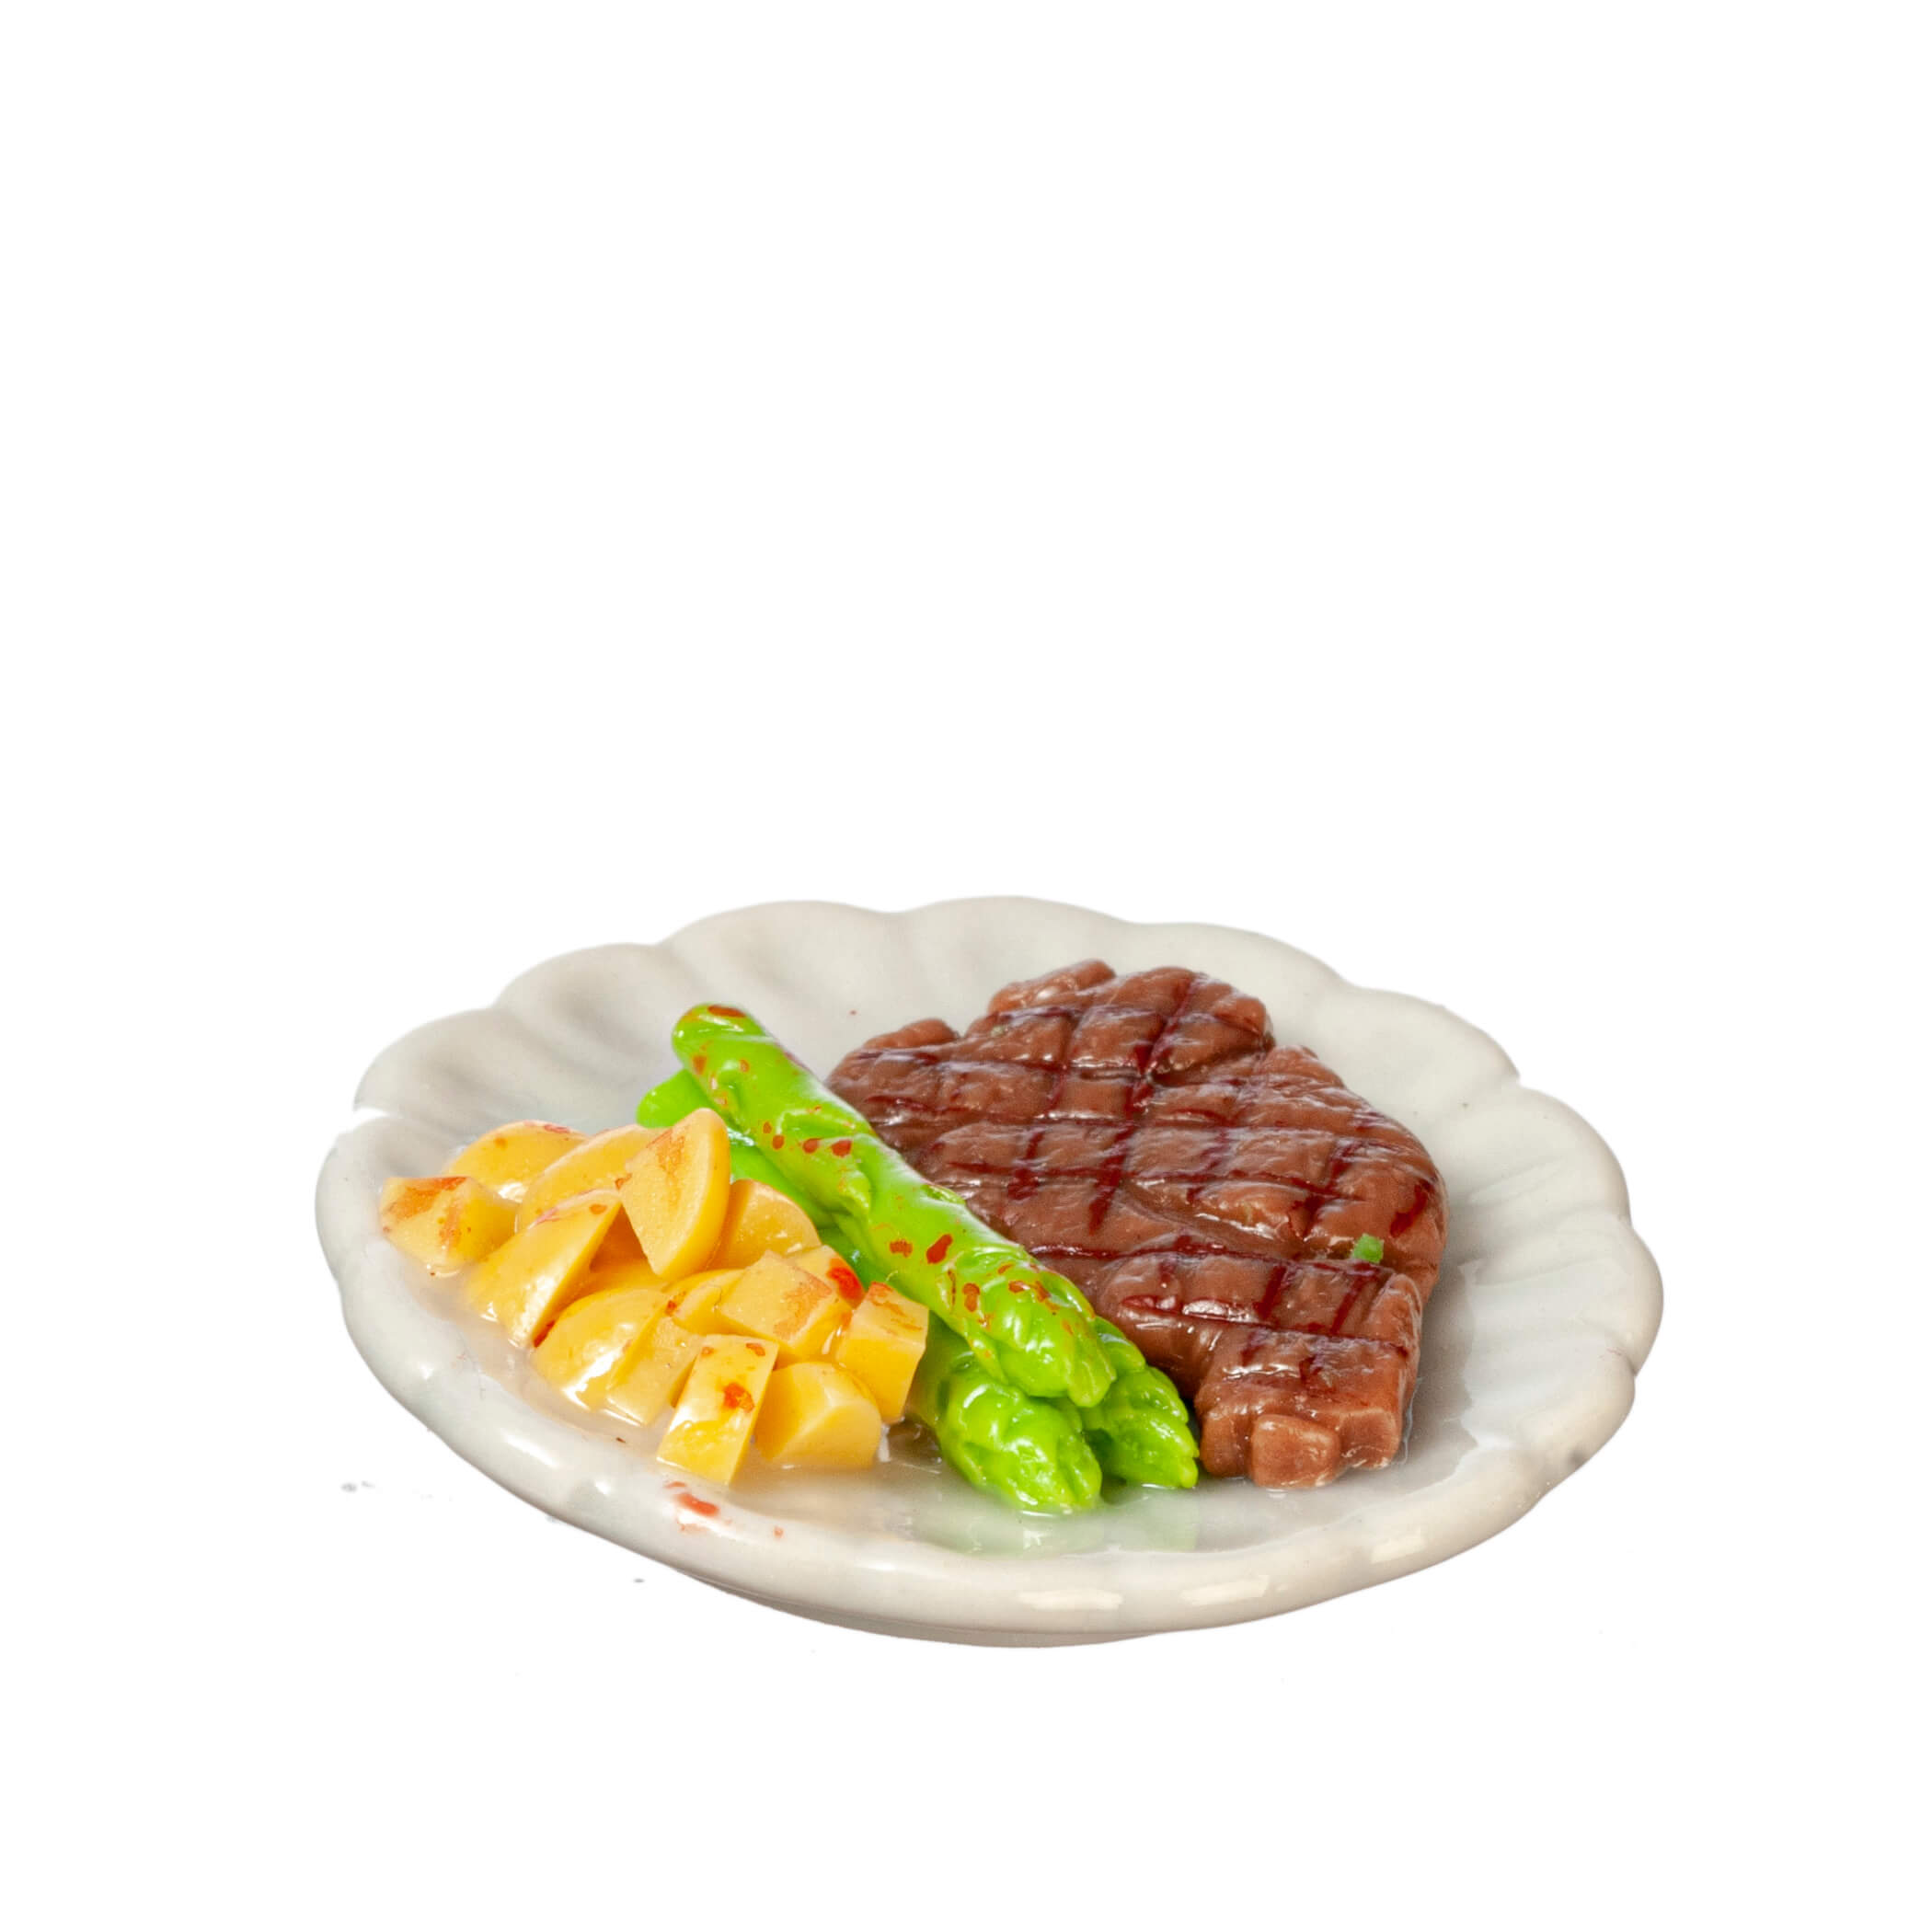 Steak & Veggies Plate